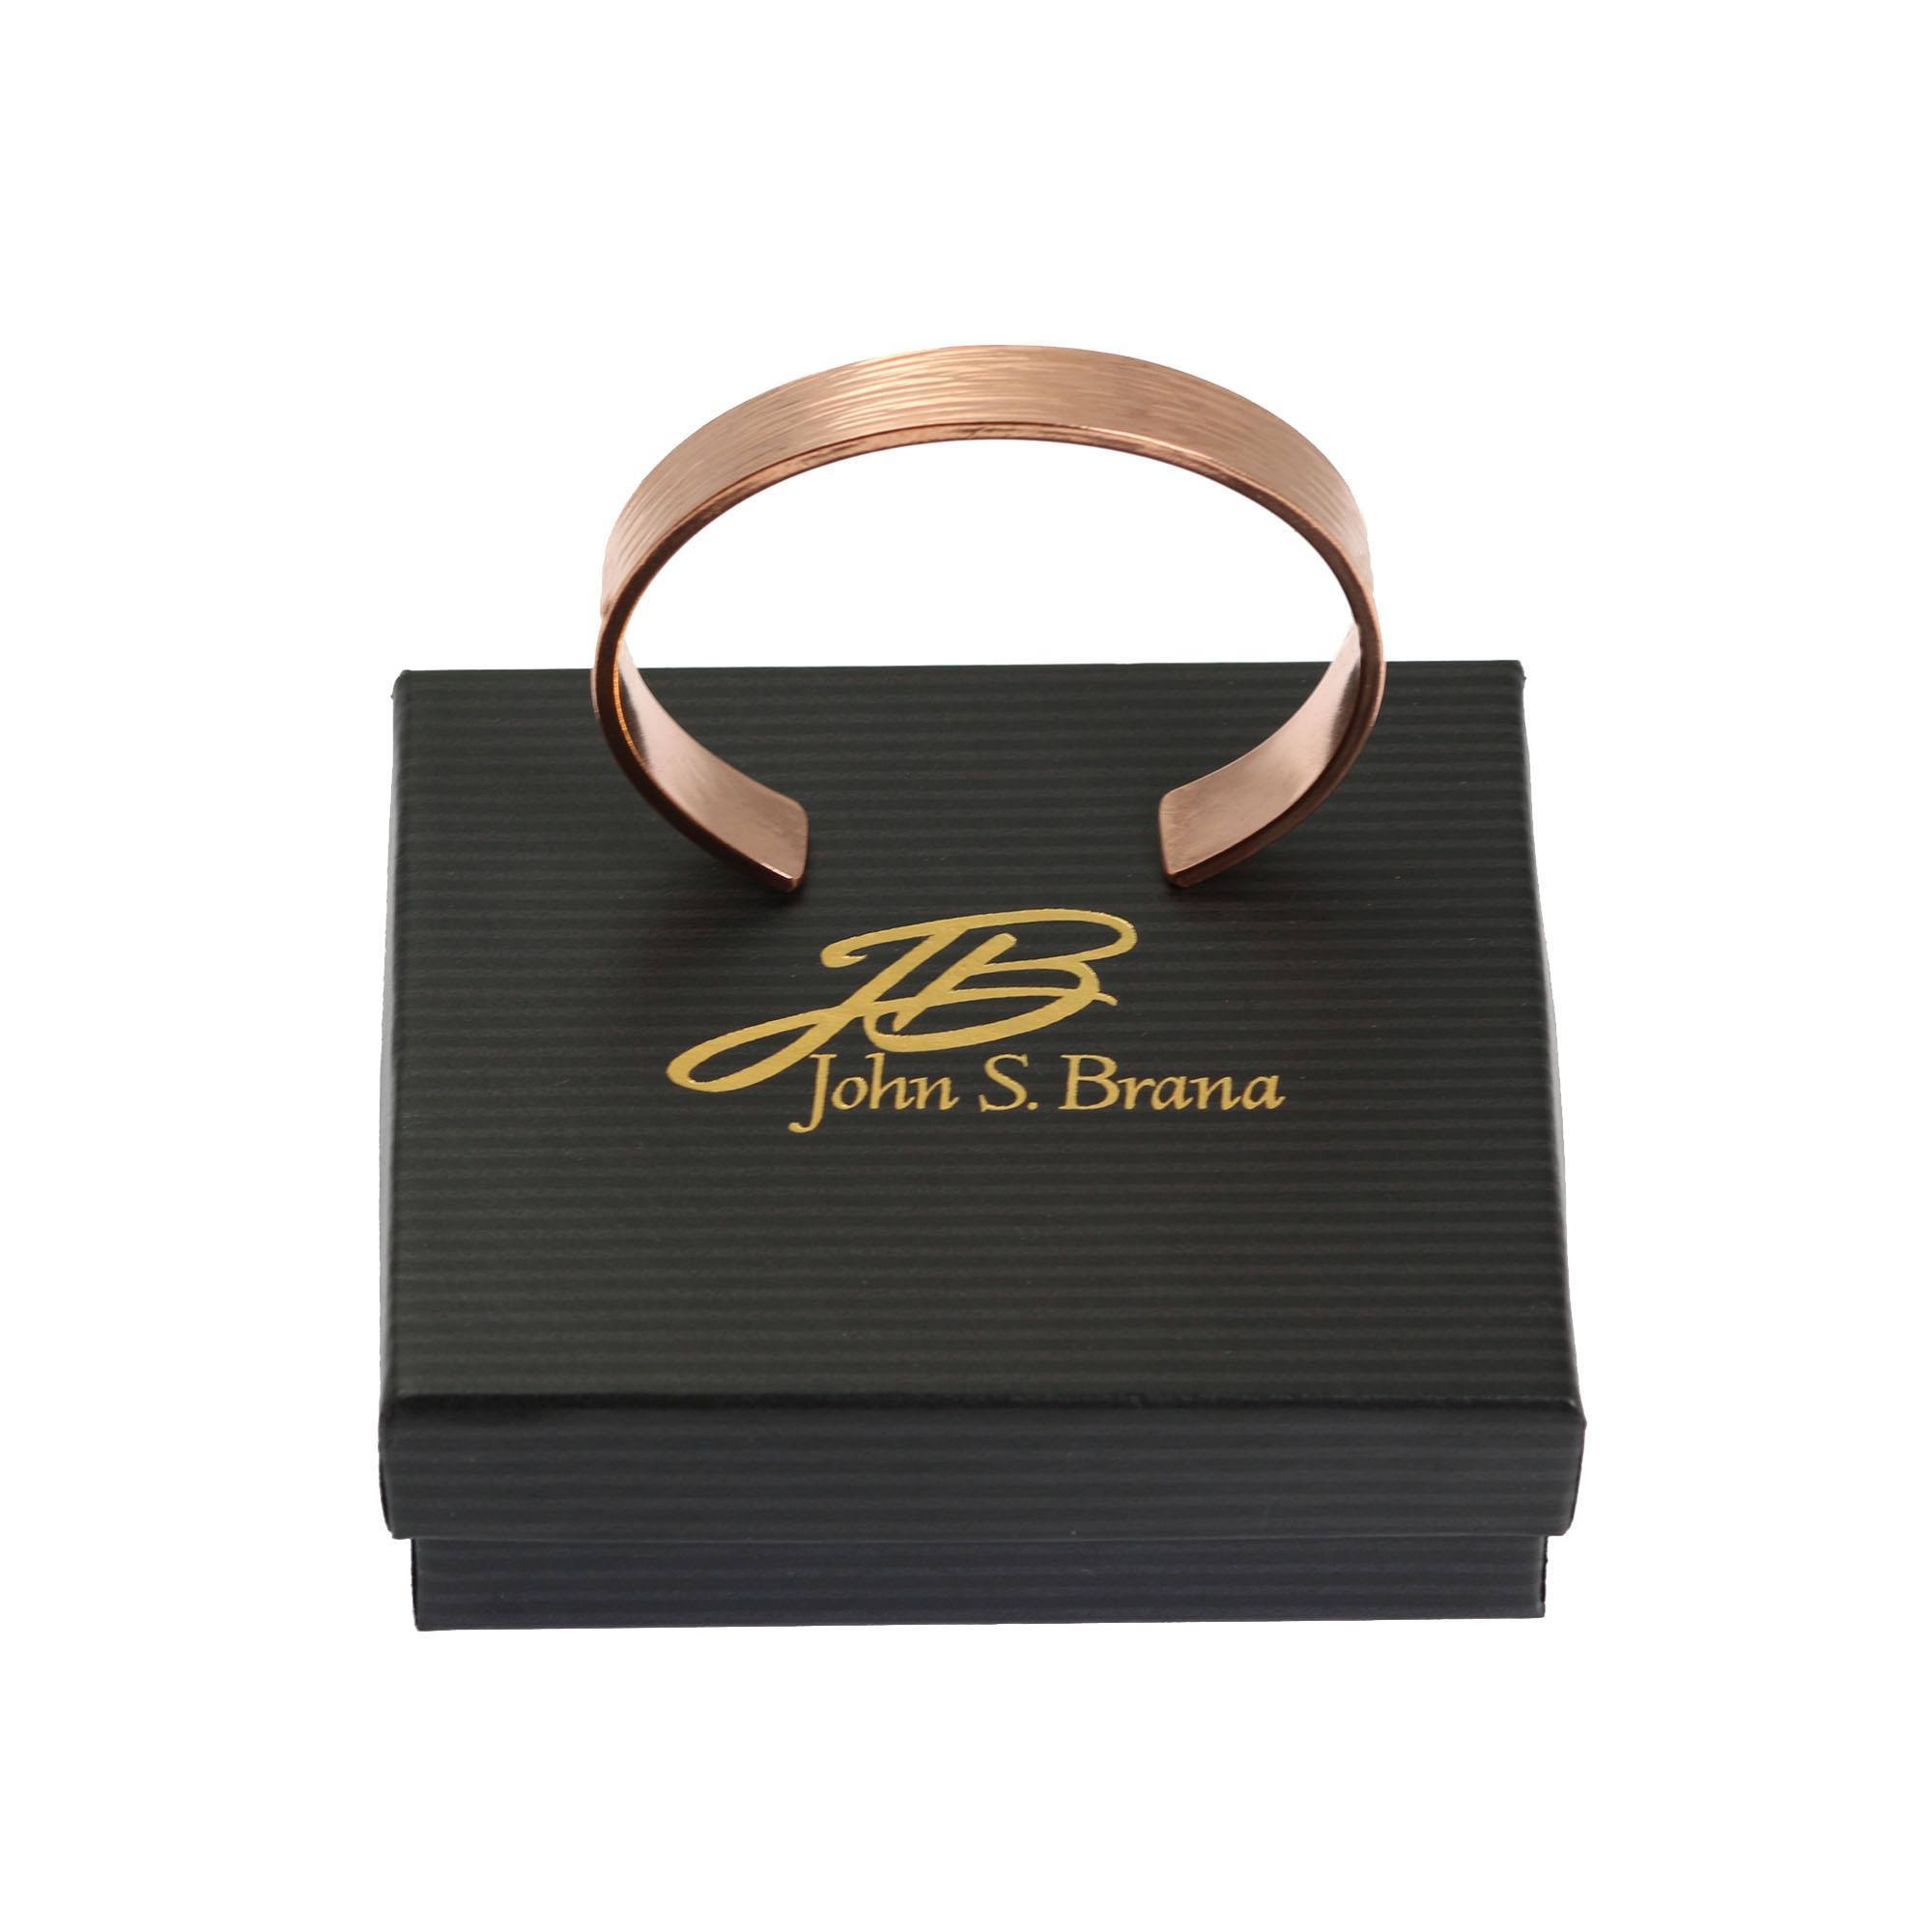 10mm Wide Bark Copper Cuff Bracelet on top of Black Gift Box